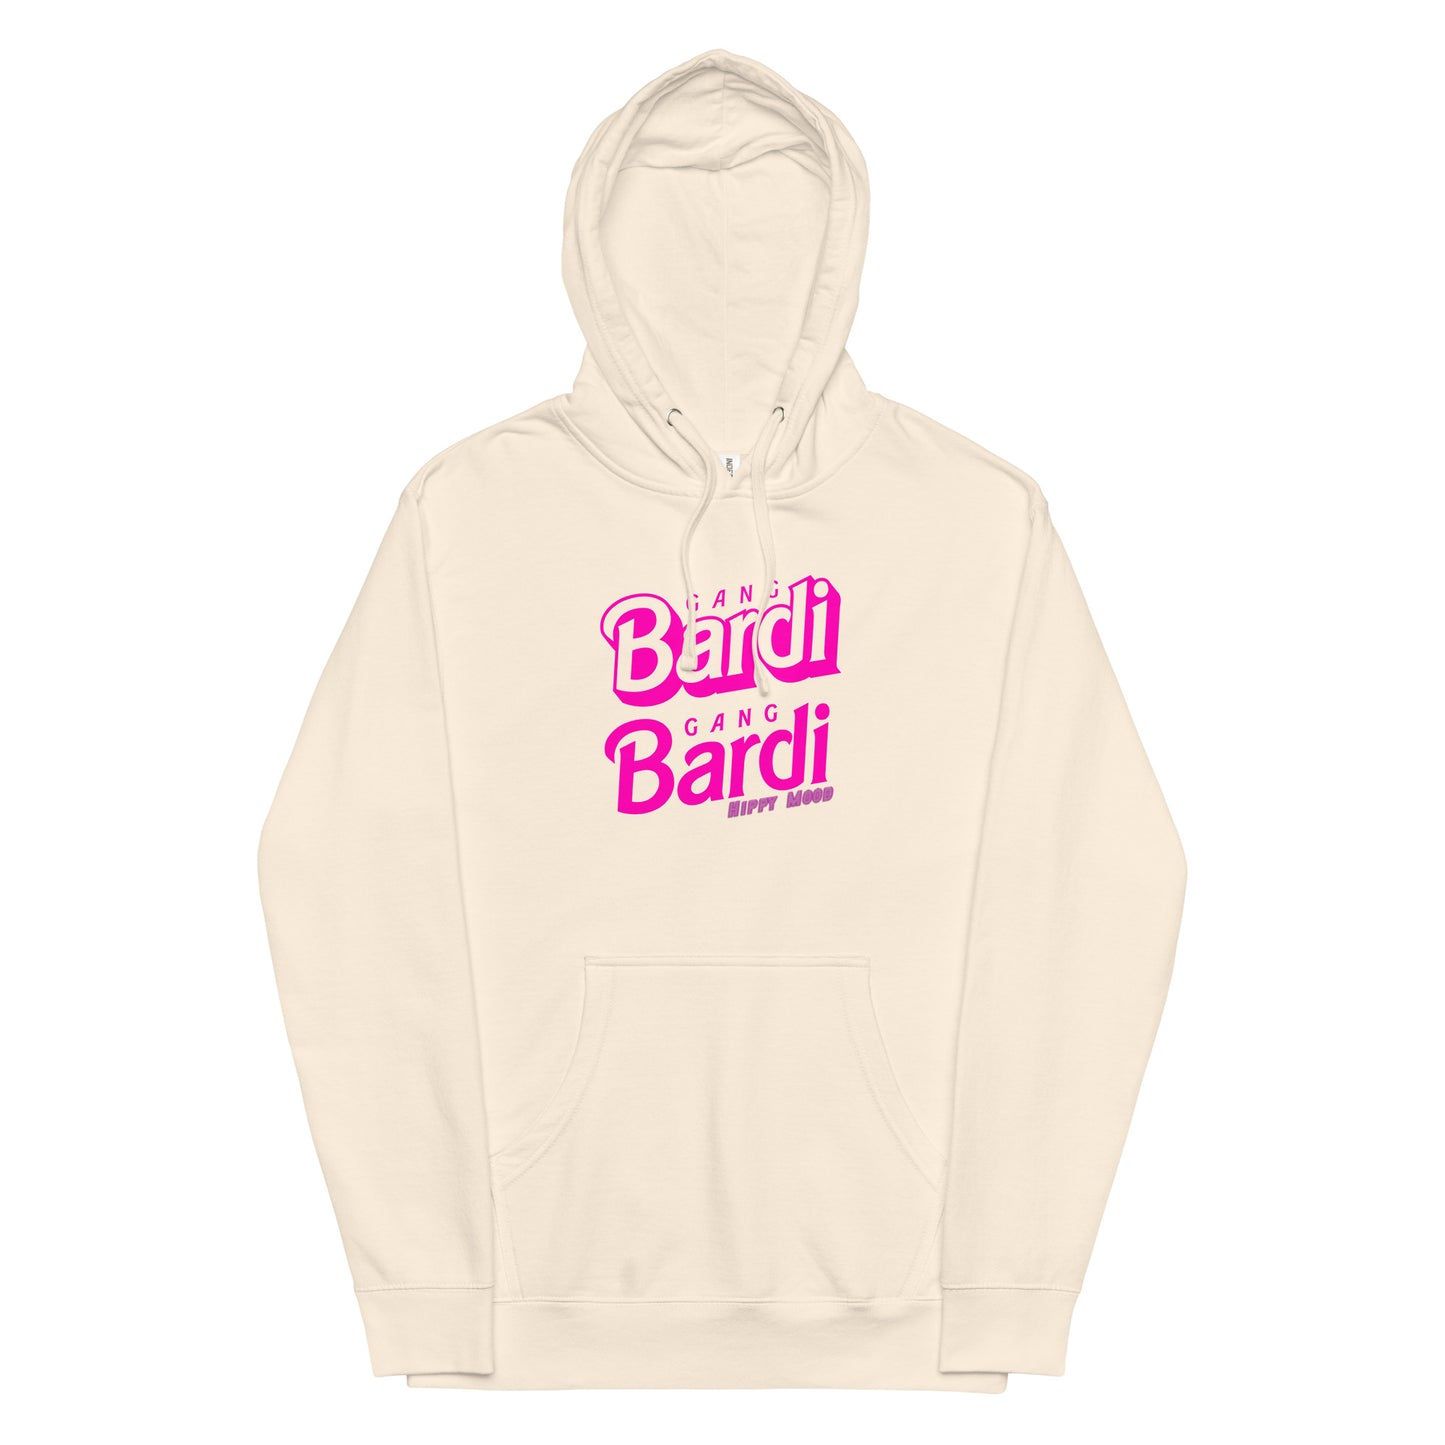 Gang Bardi | Unisex midweight hoodie